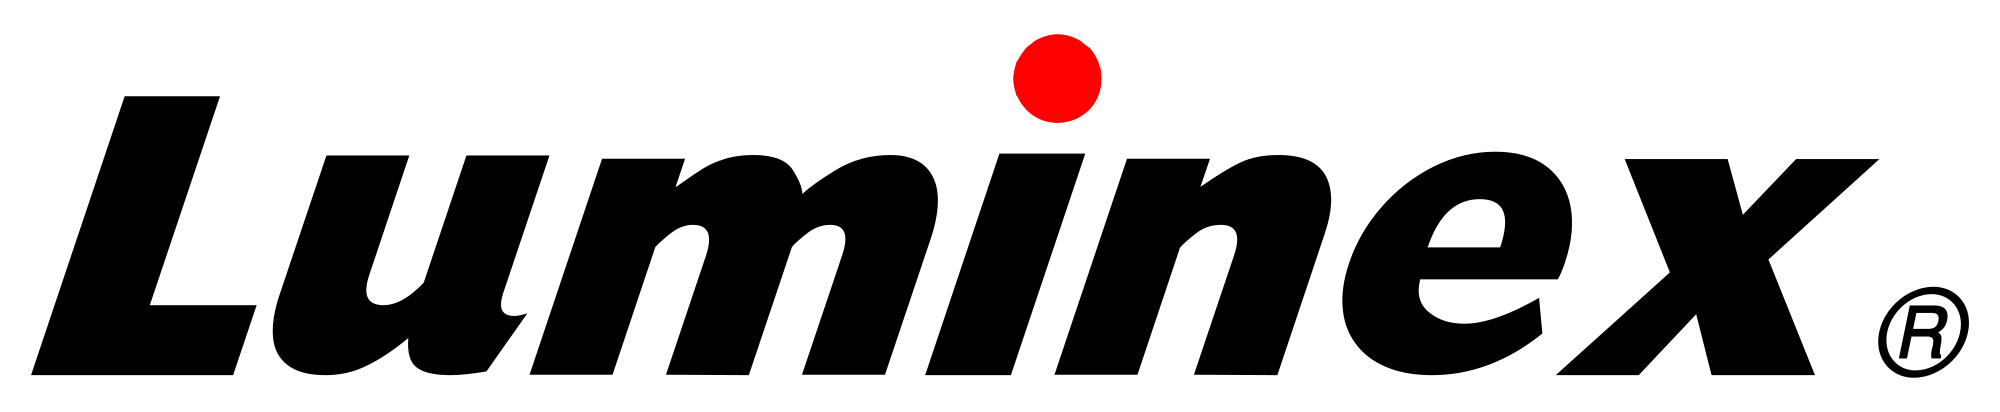 Luminex_Corporation_logo